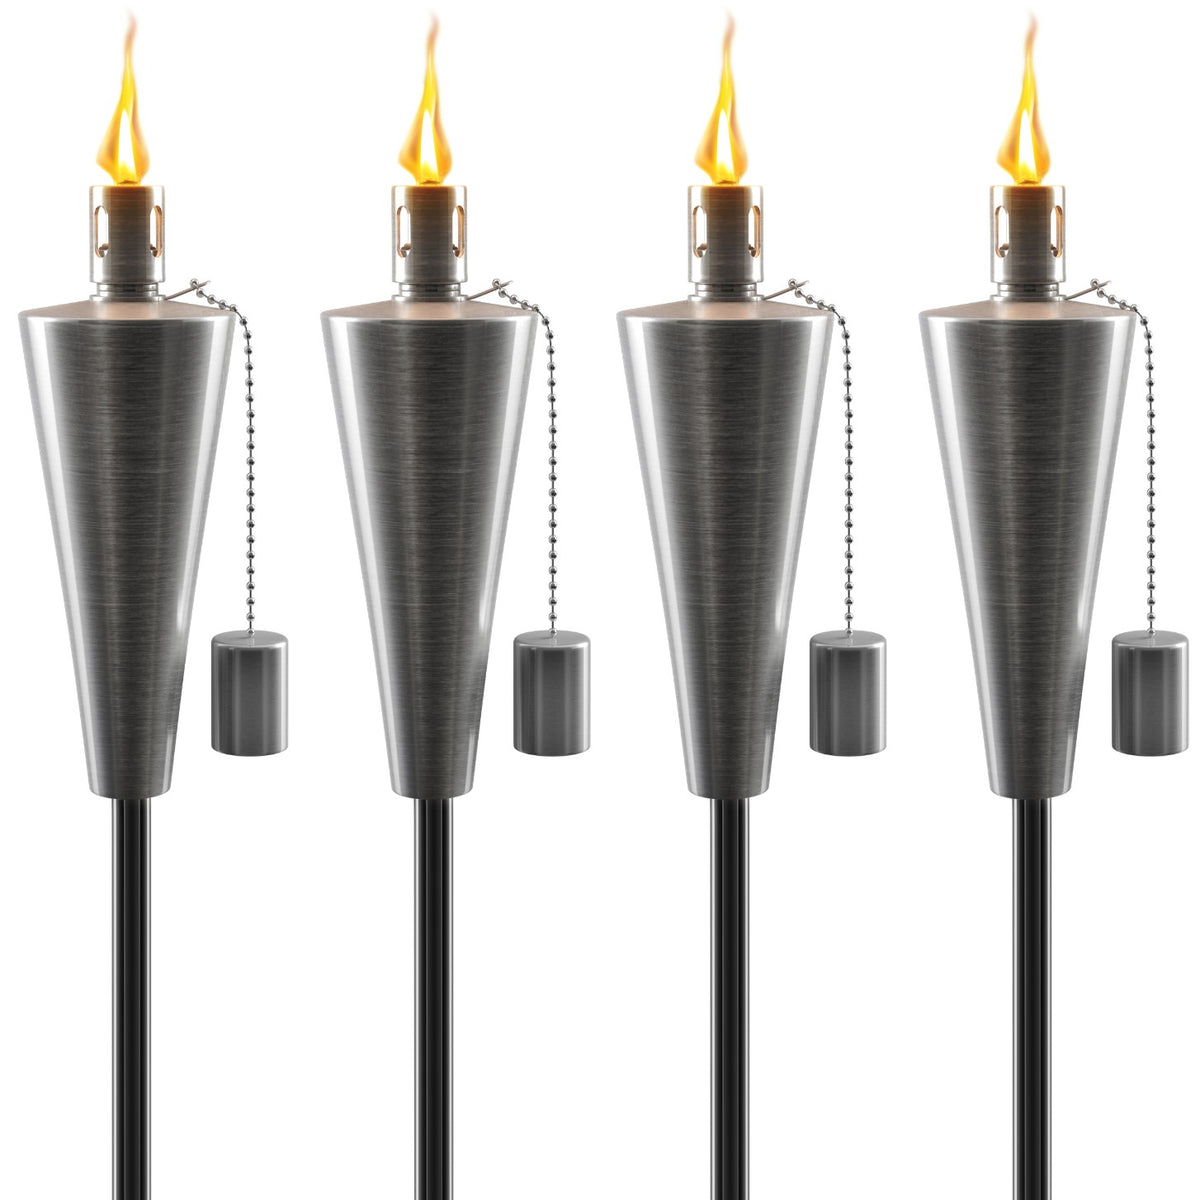 Matney Outdoor Torch Lights - Set of 4 (Cylinder)